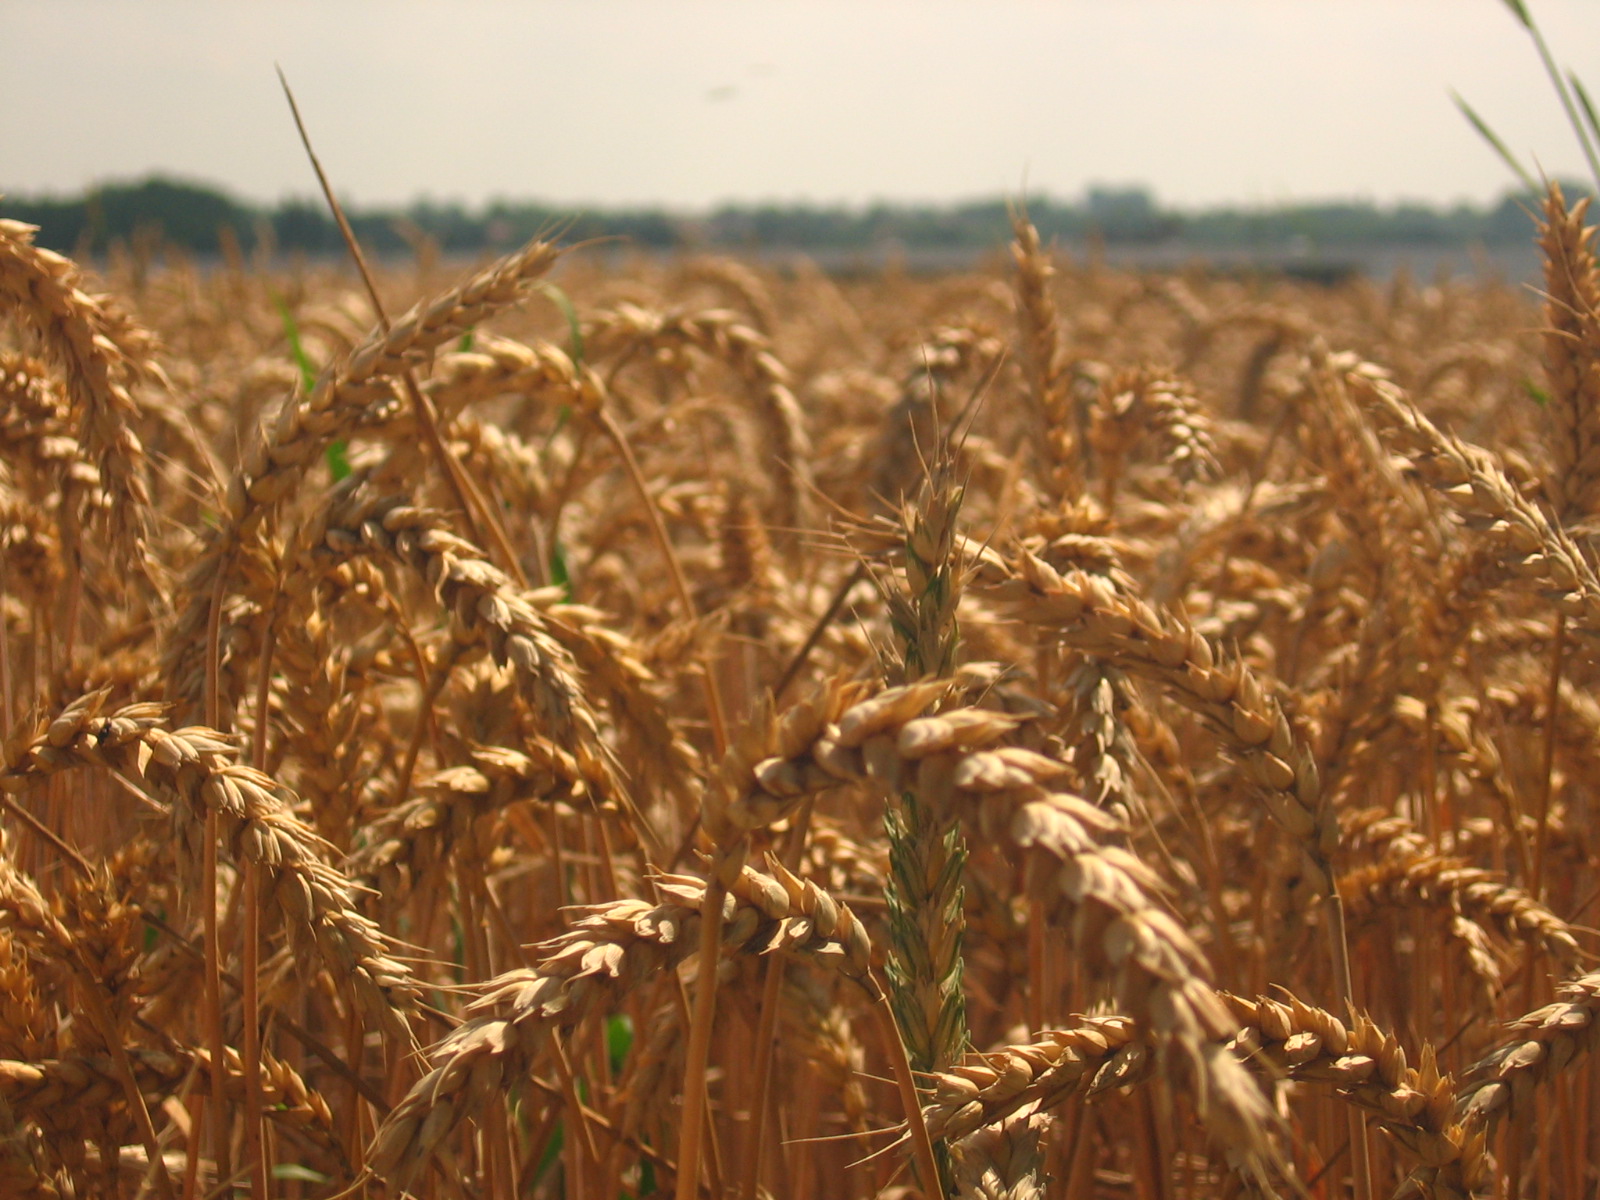 amongst the fields of grains..